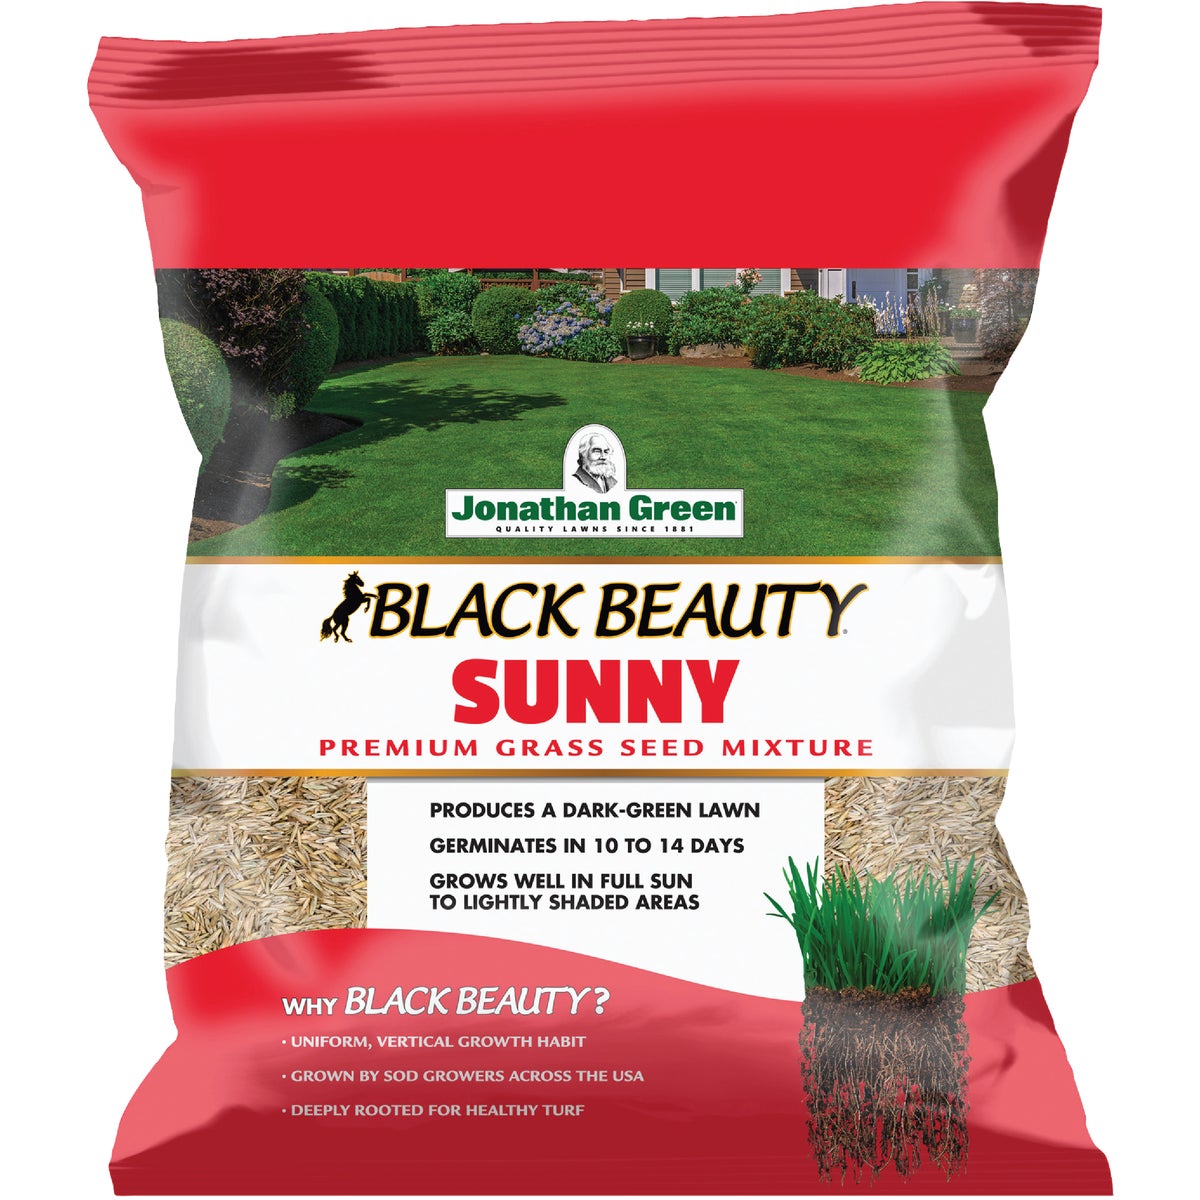 Item 703492, Full sun grass seed mixture.